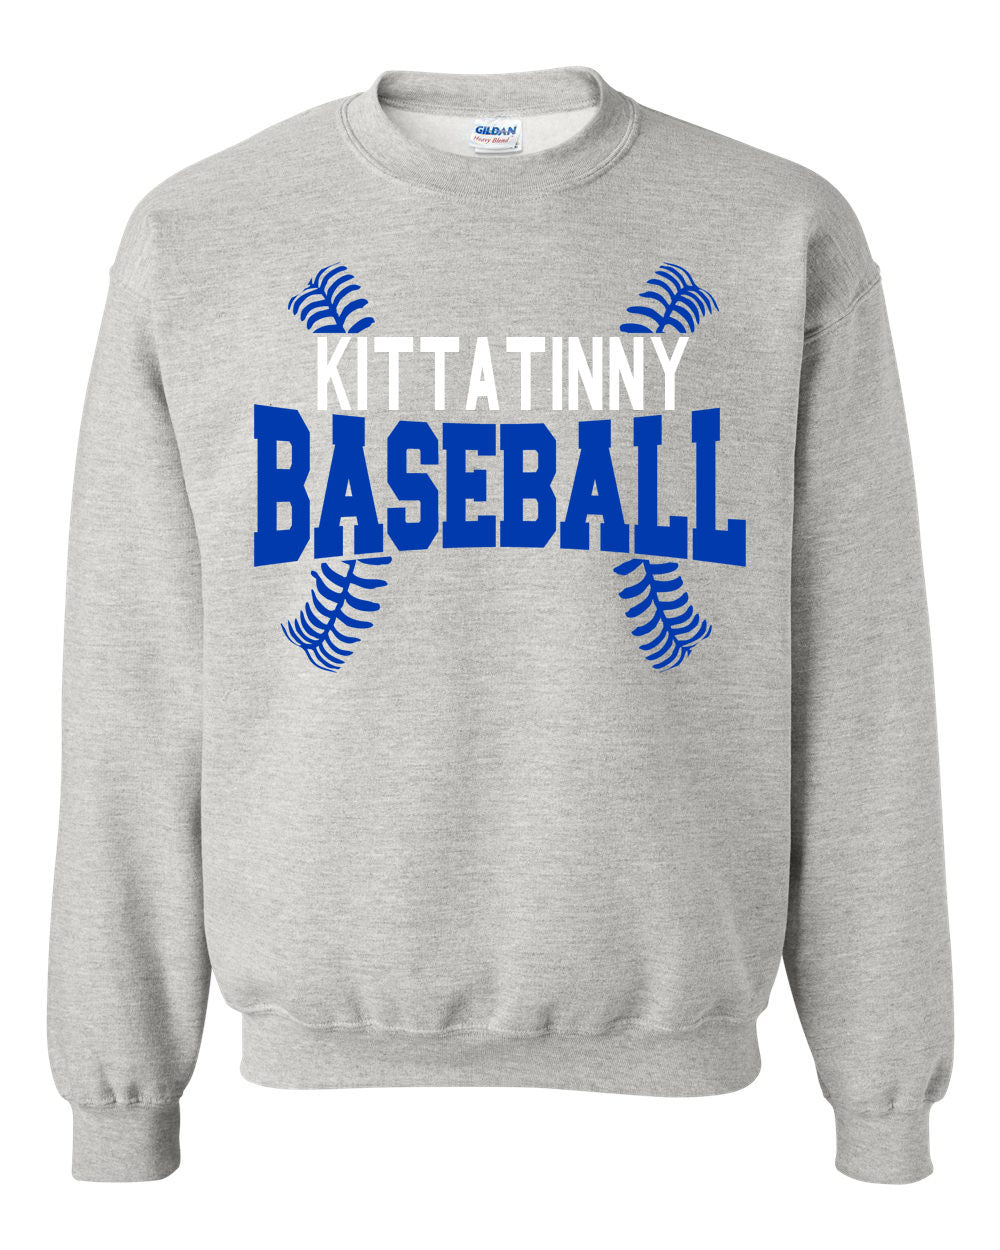 Kittatinny Baseball non hooded sweatshirt